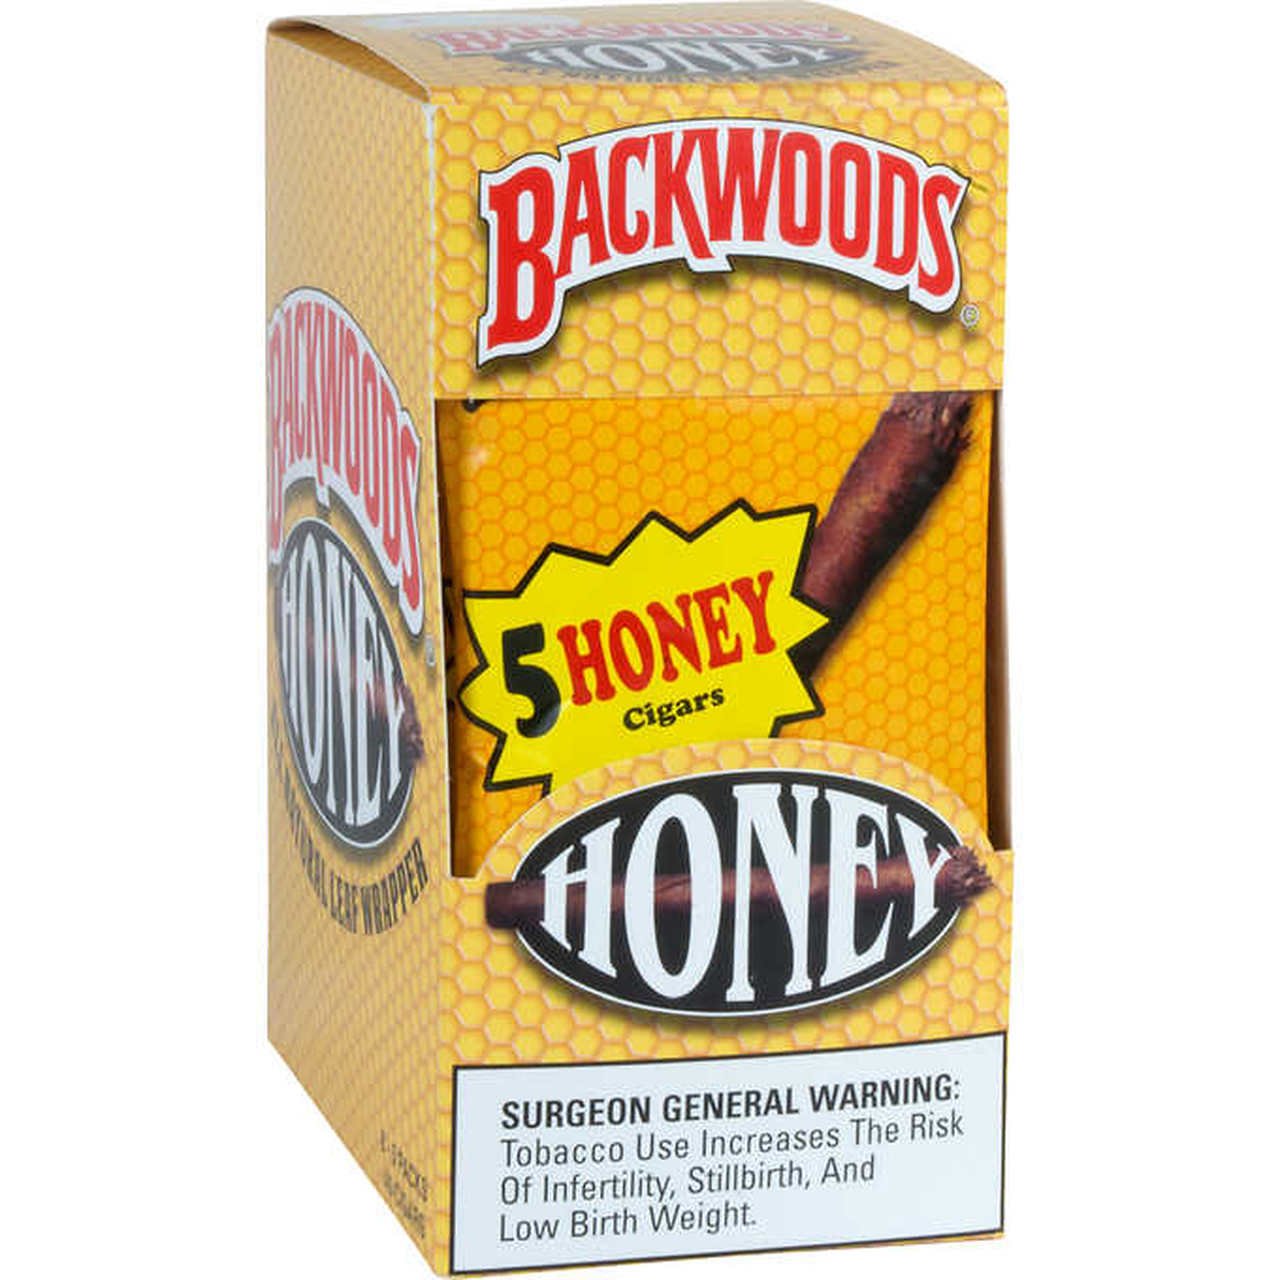 Backwood Honey